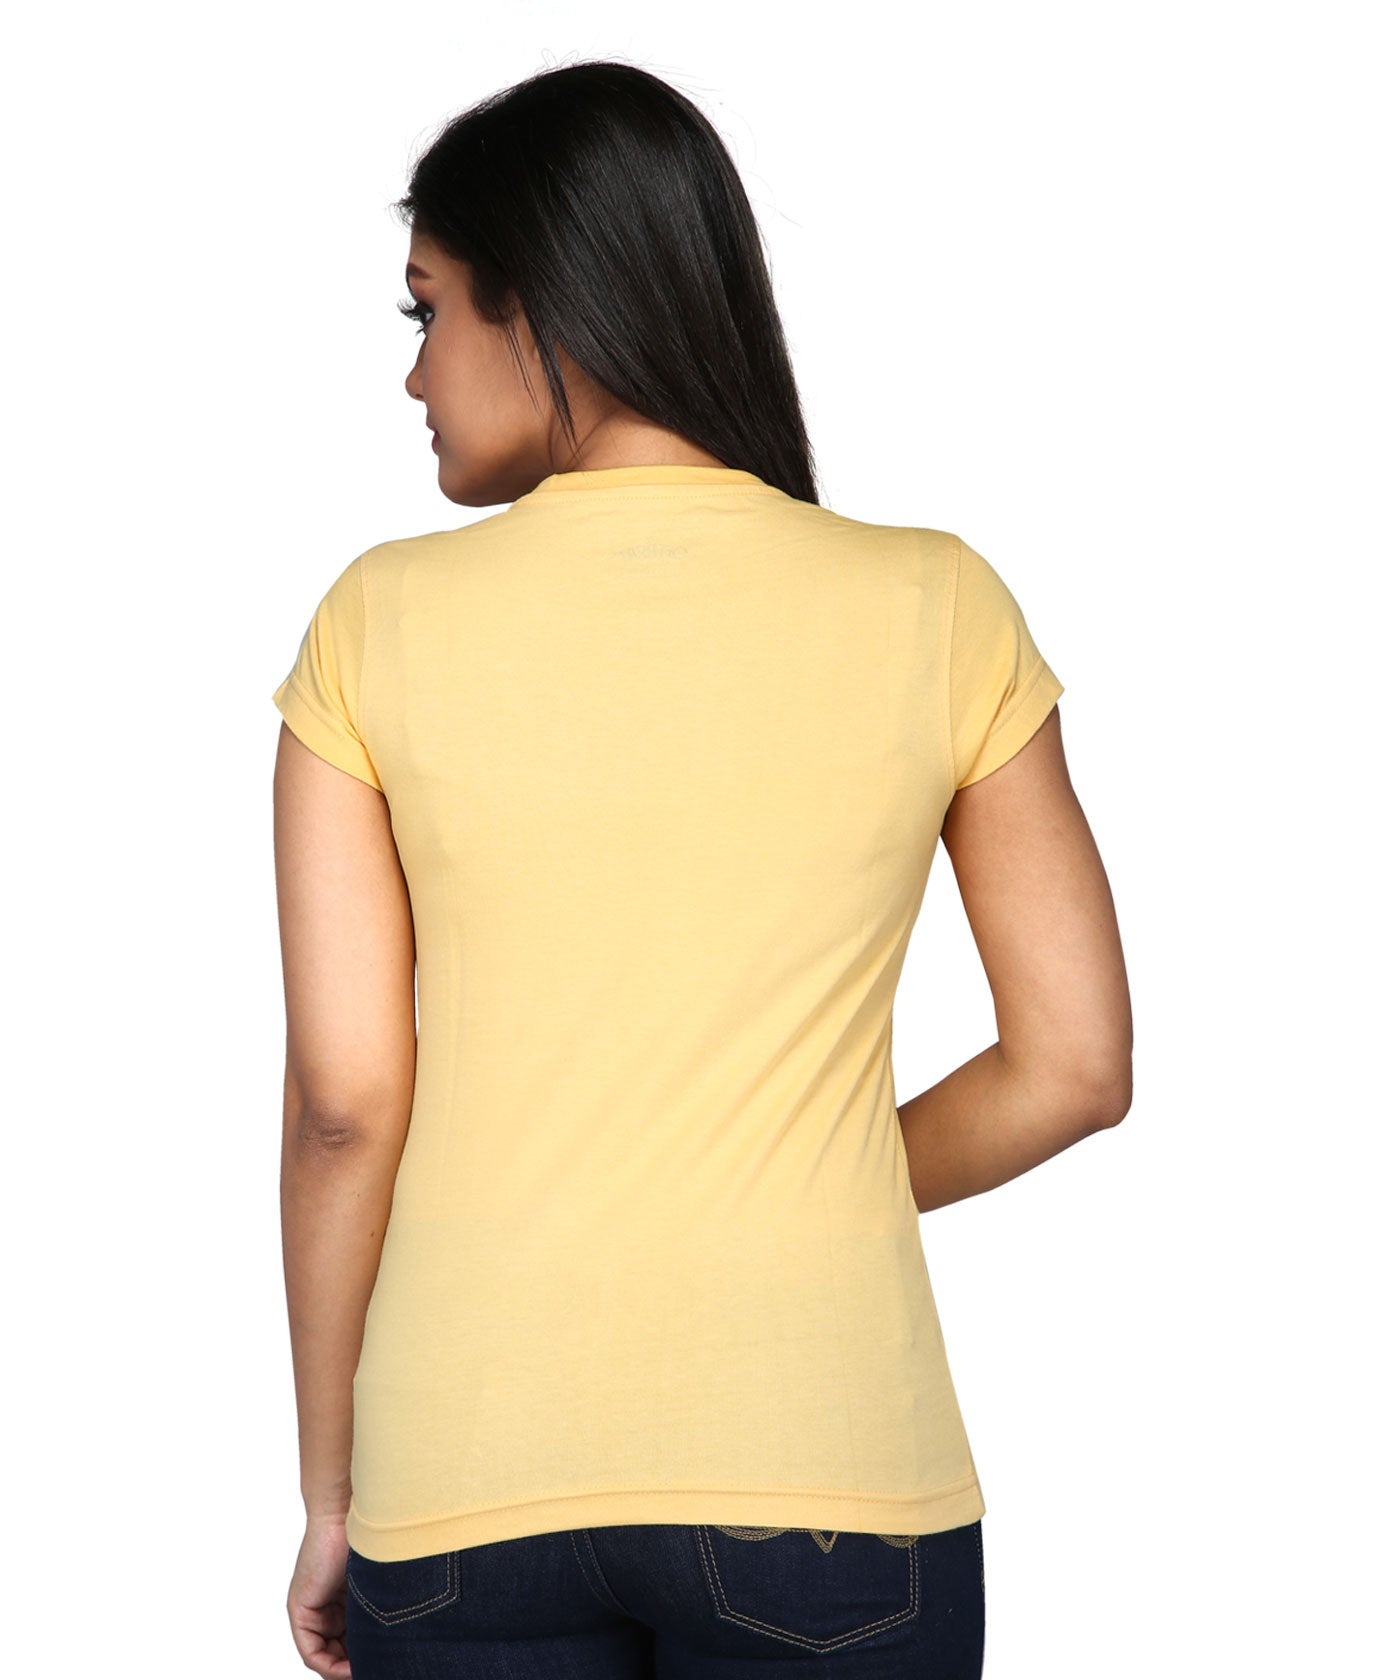 H-Line Border - Block Print Tees for Women - Golden Yellow